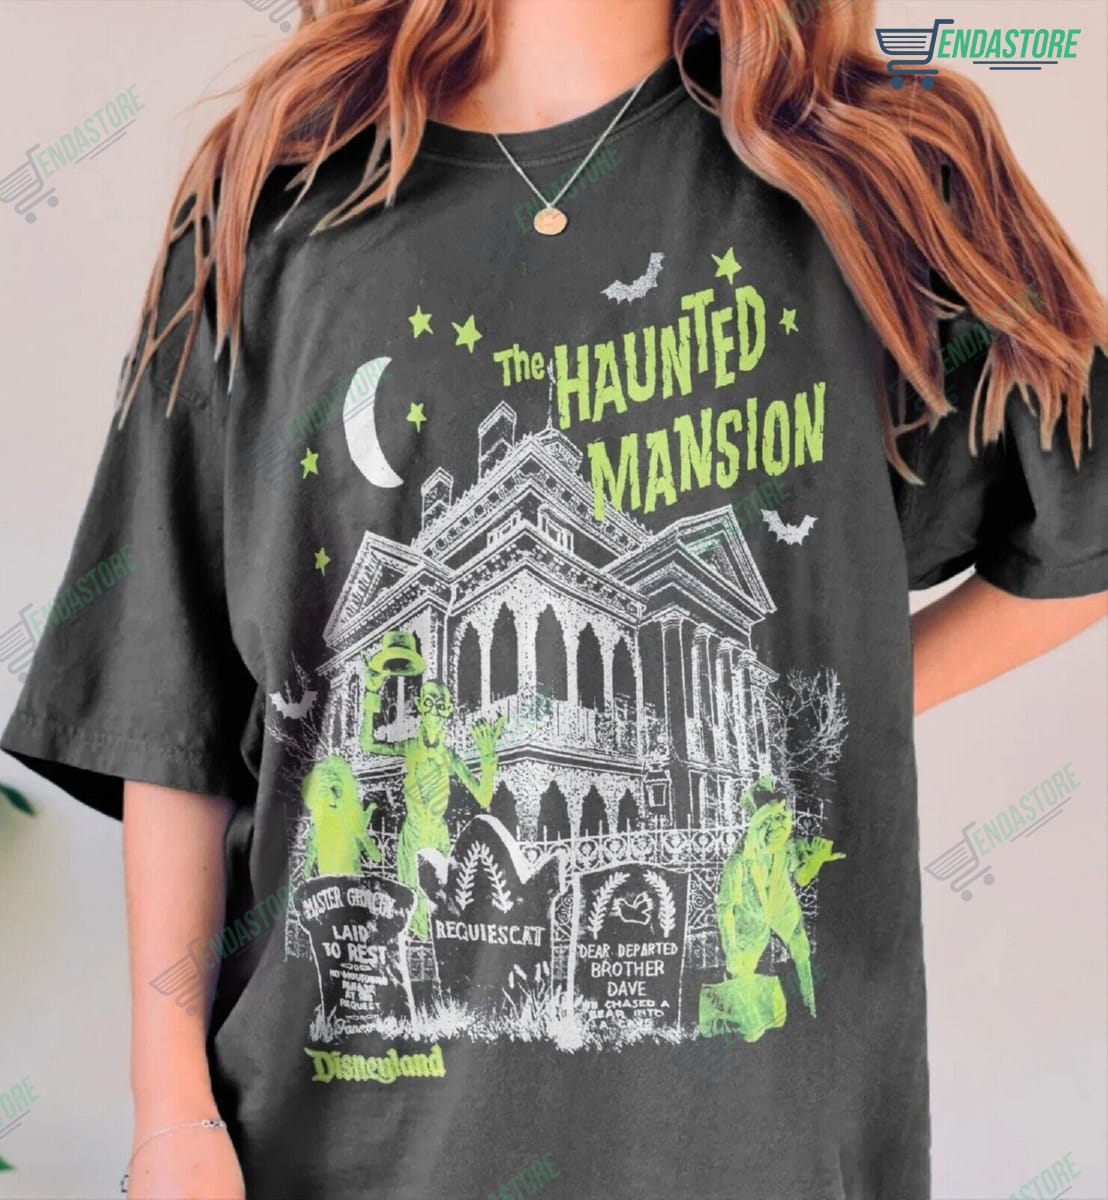 Vintage Haunted Mansion Shirt - Endastore.com